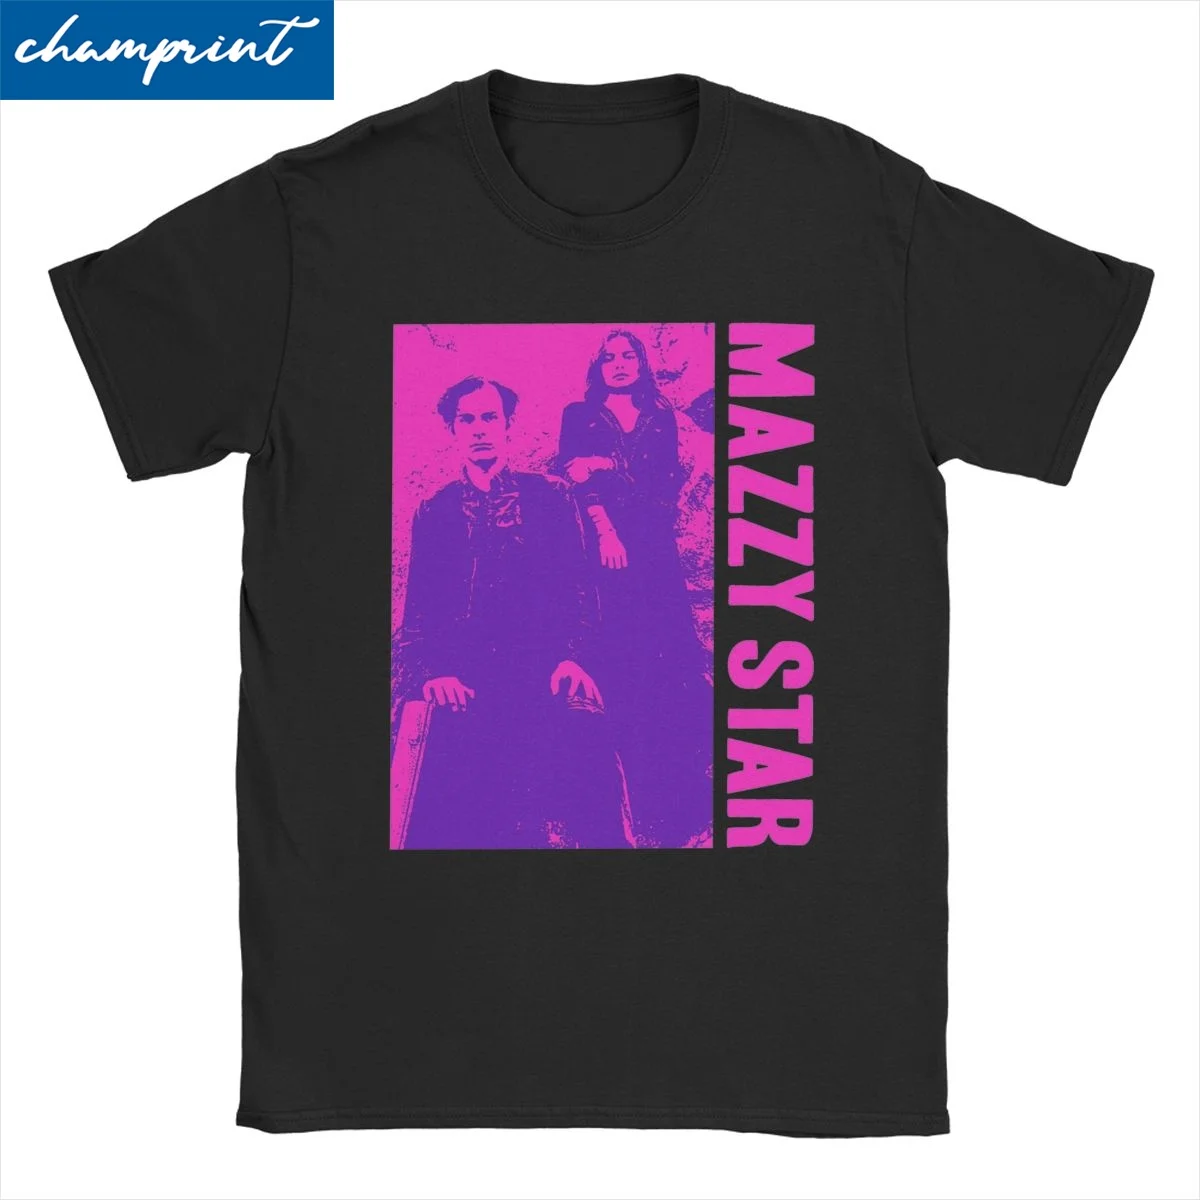 

Футболка Mazzy Star 90s Dreampop для мужчин и женщин, 100% хлопок, новинка, футболки в стиле панк-рок, футболка с коротким рукавом и графическим принтом